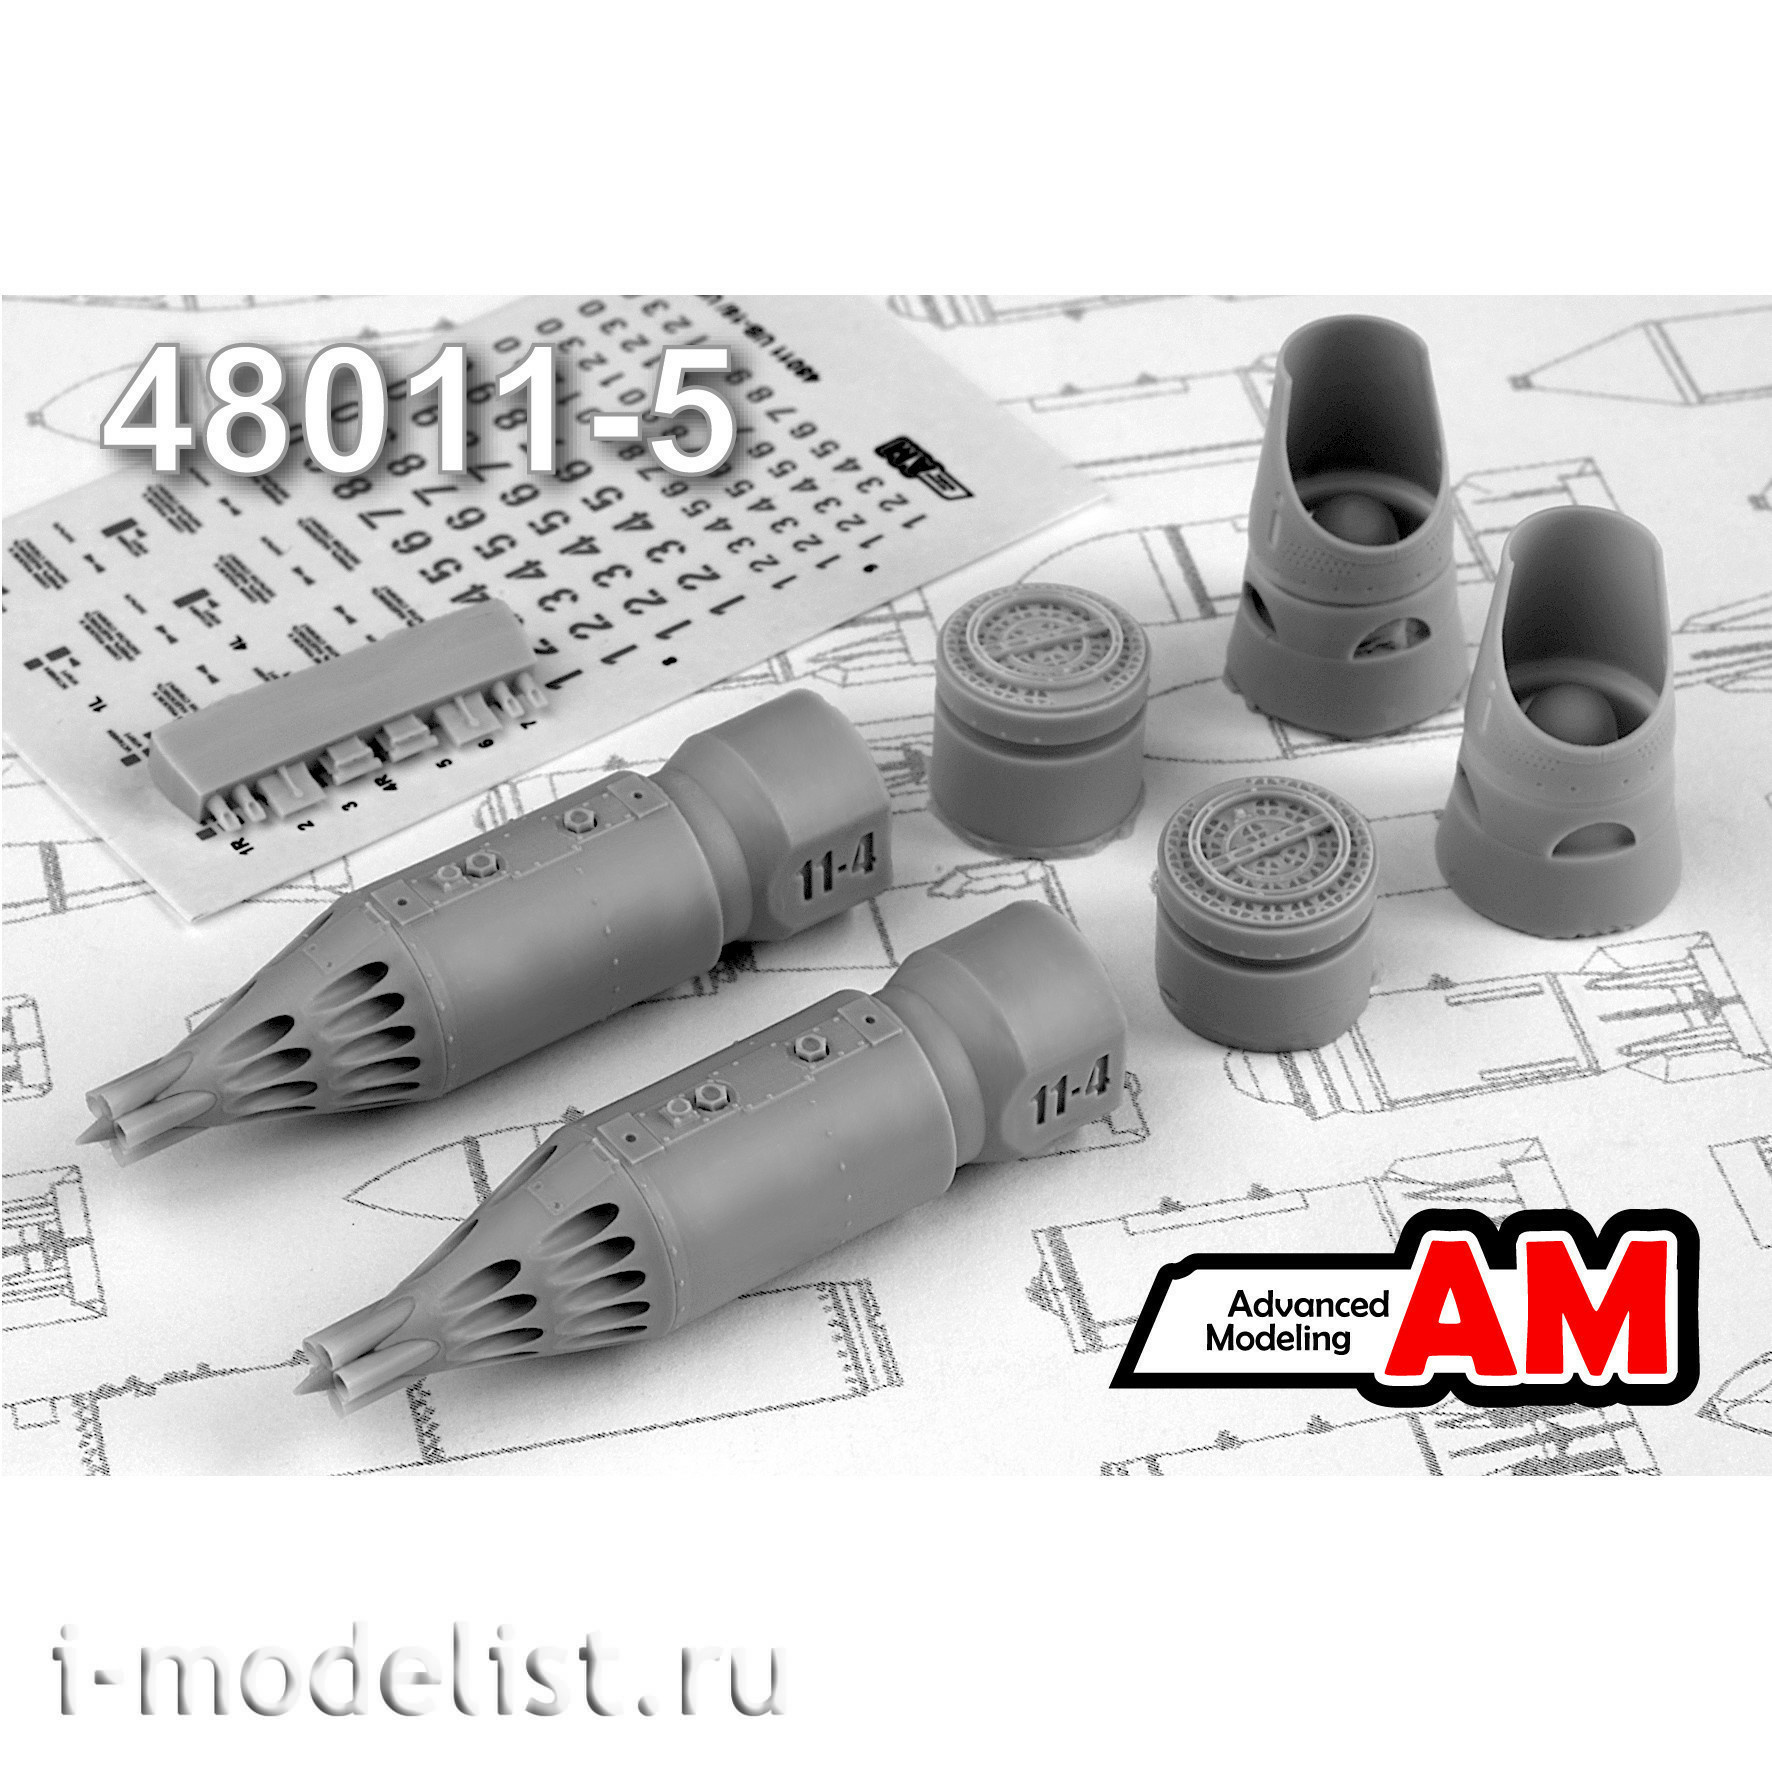 AMC48011-5 Advanced Modeling 1/48 Block NAR UB-32A-24 57 mm S-5